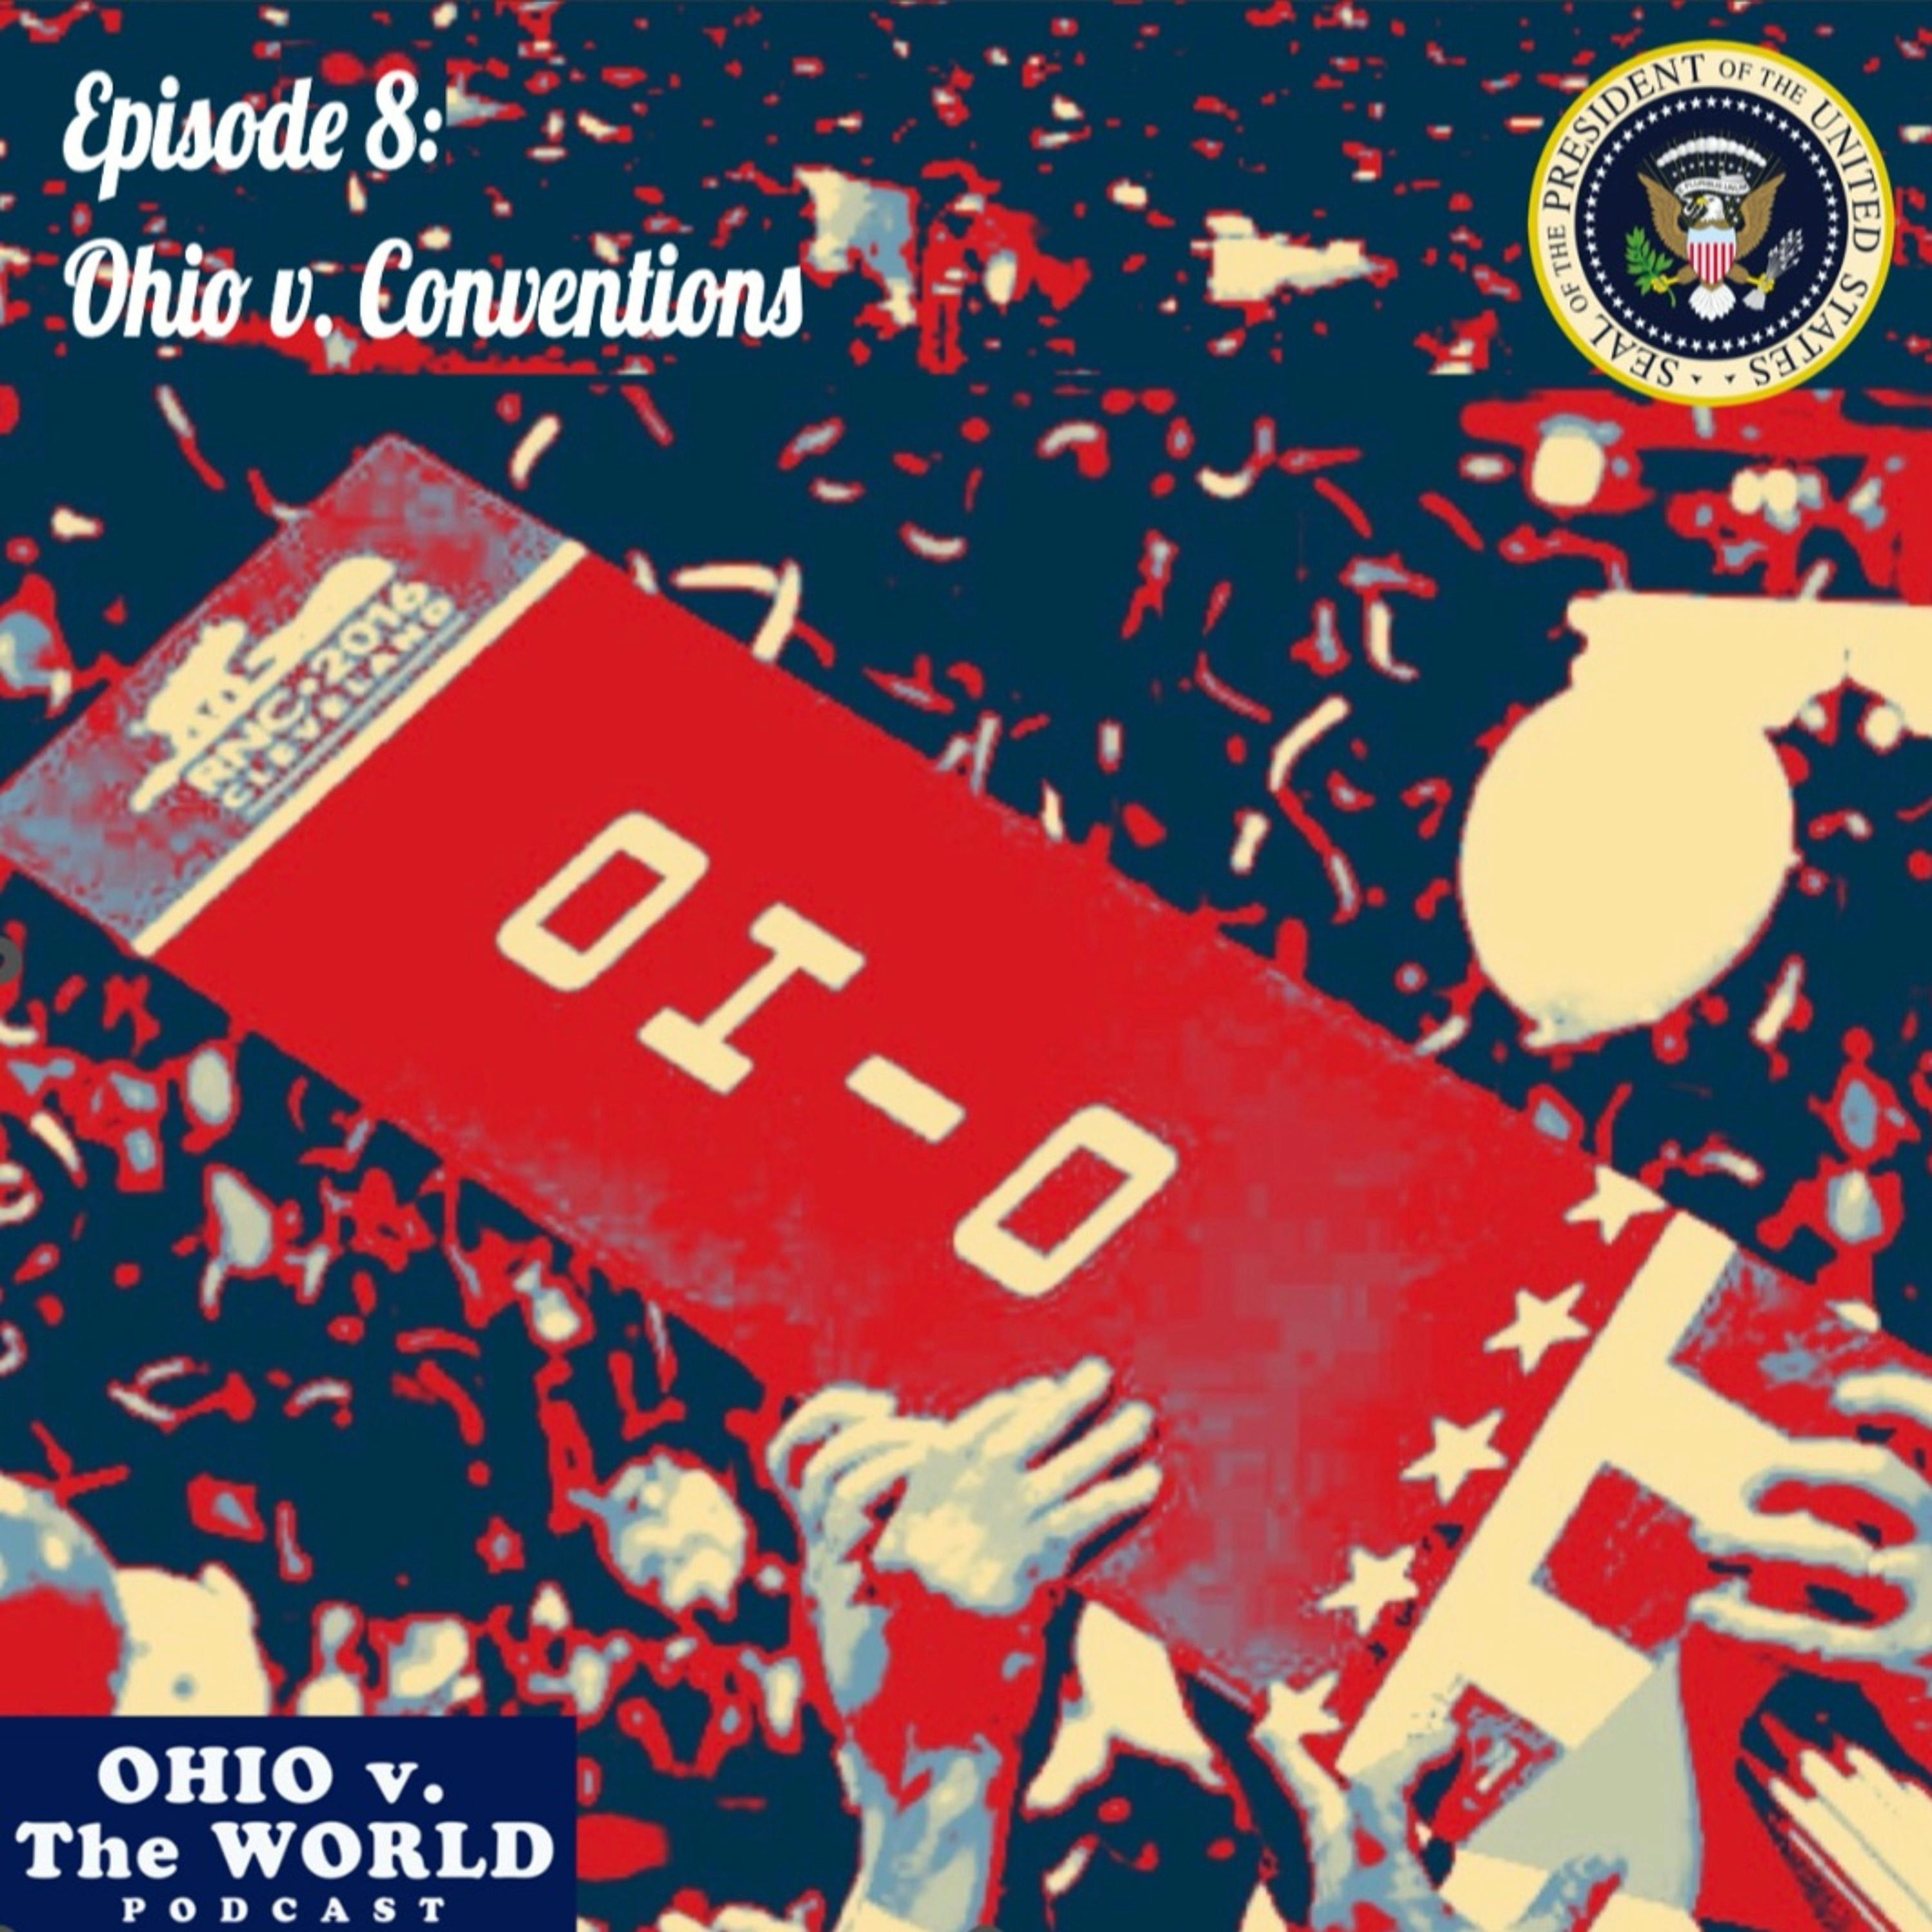 Episode 8: Ohio v. Conventions